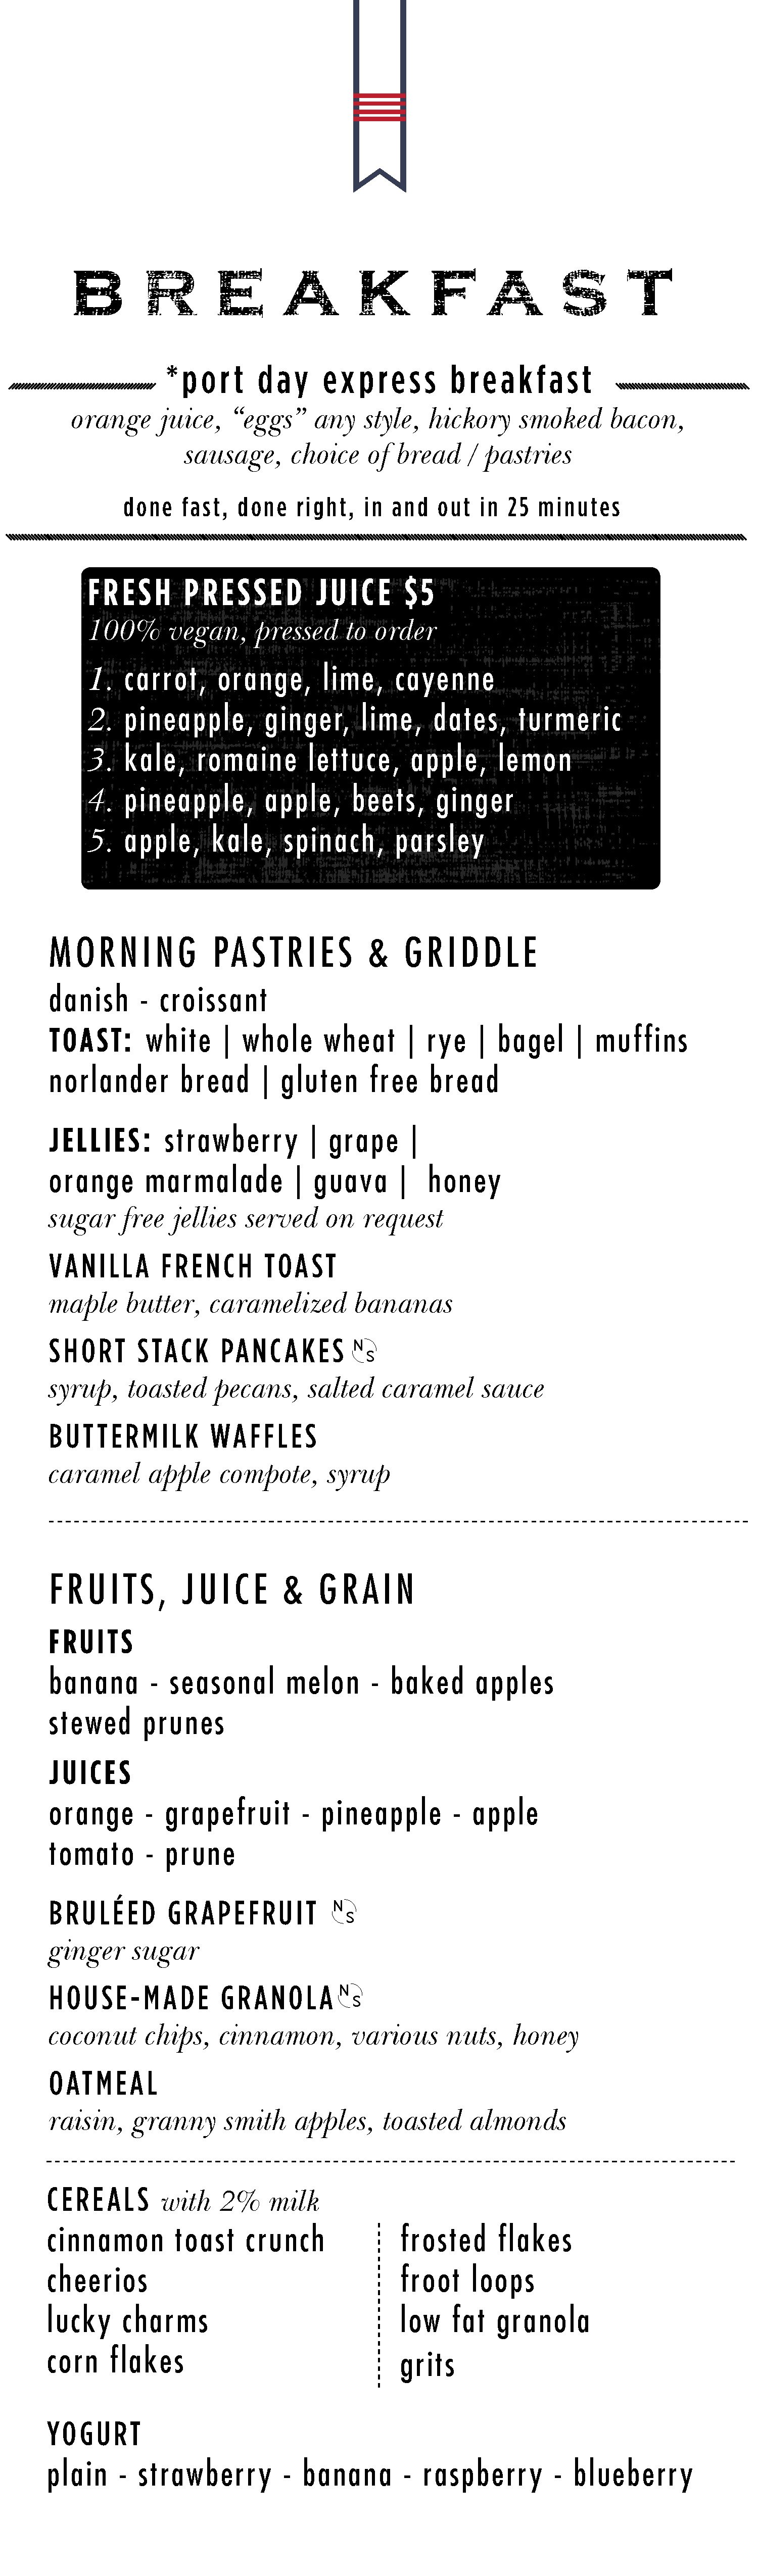 QR-breakfast-menu_Page_1.jpg